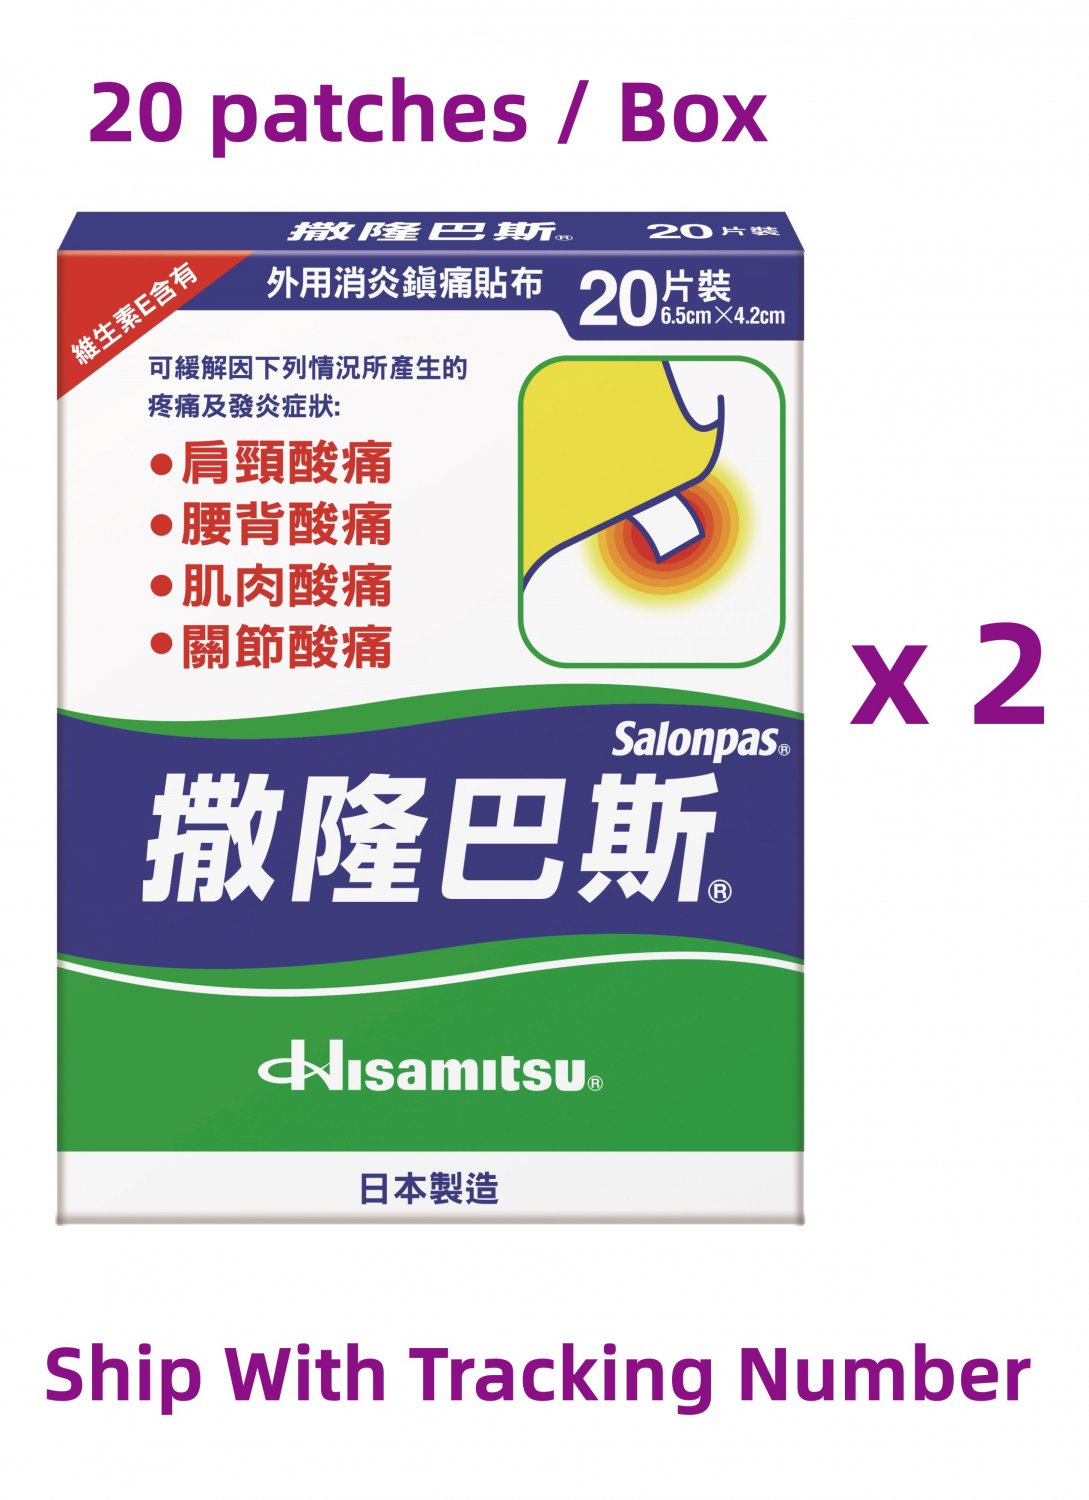 Hisamitsu Salonpas Advance Patch ( 20 patches / Box ) x 2 Boxes